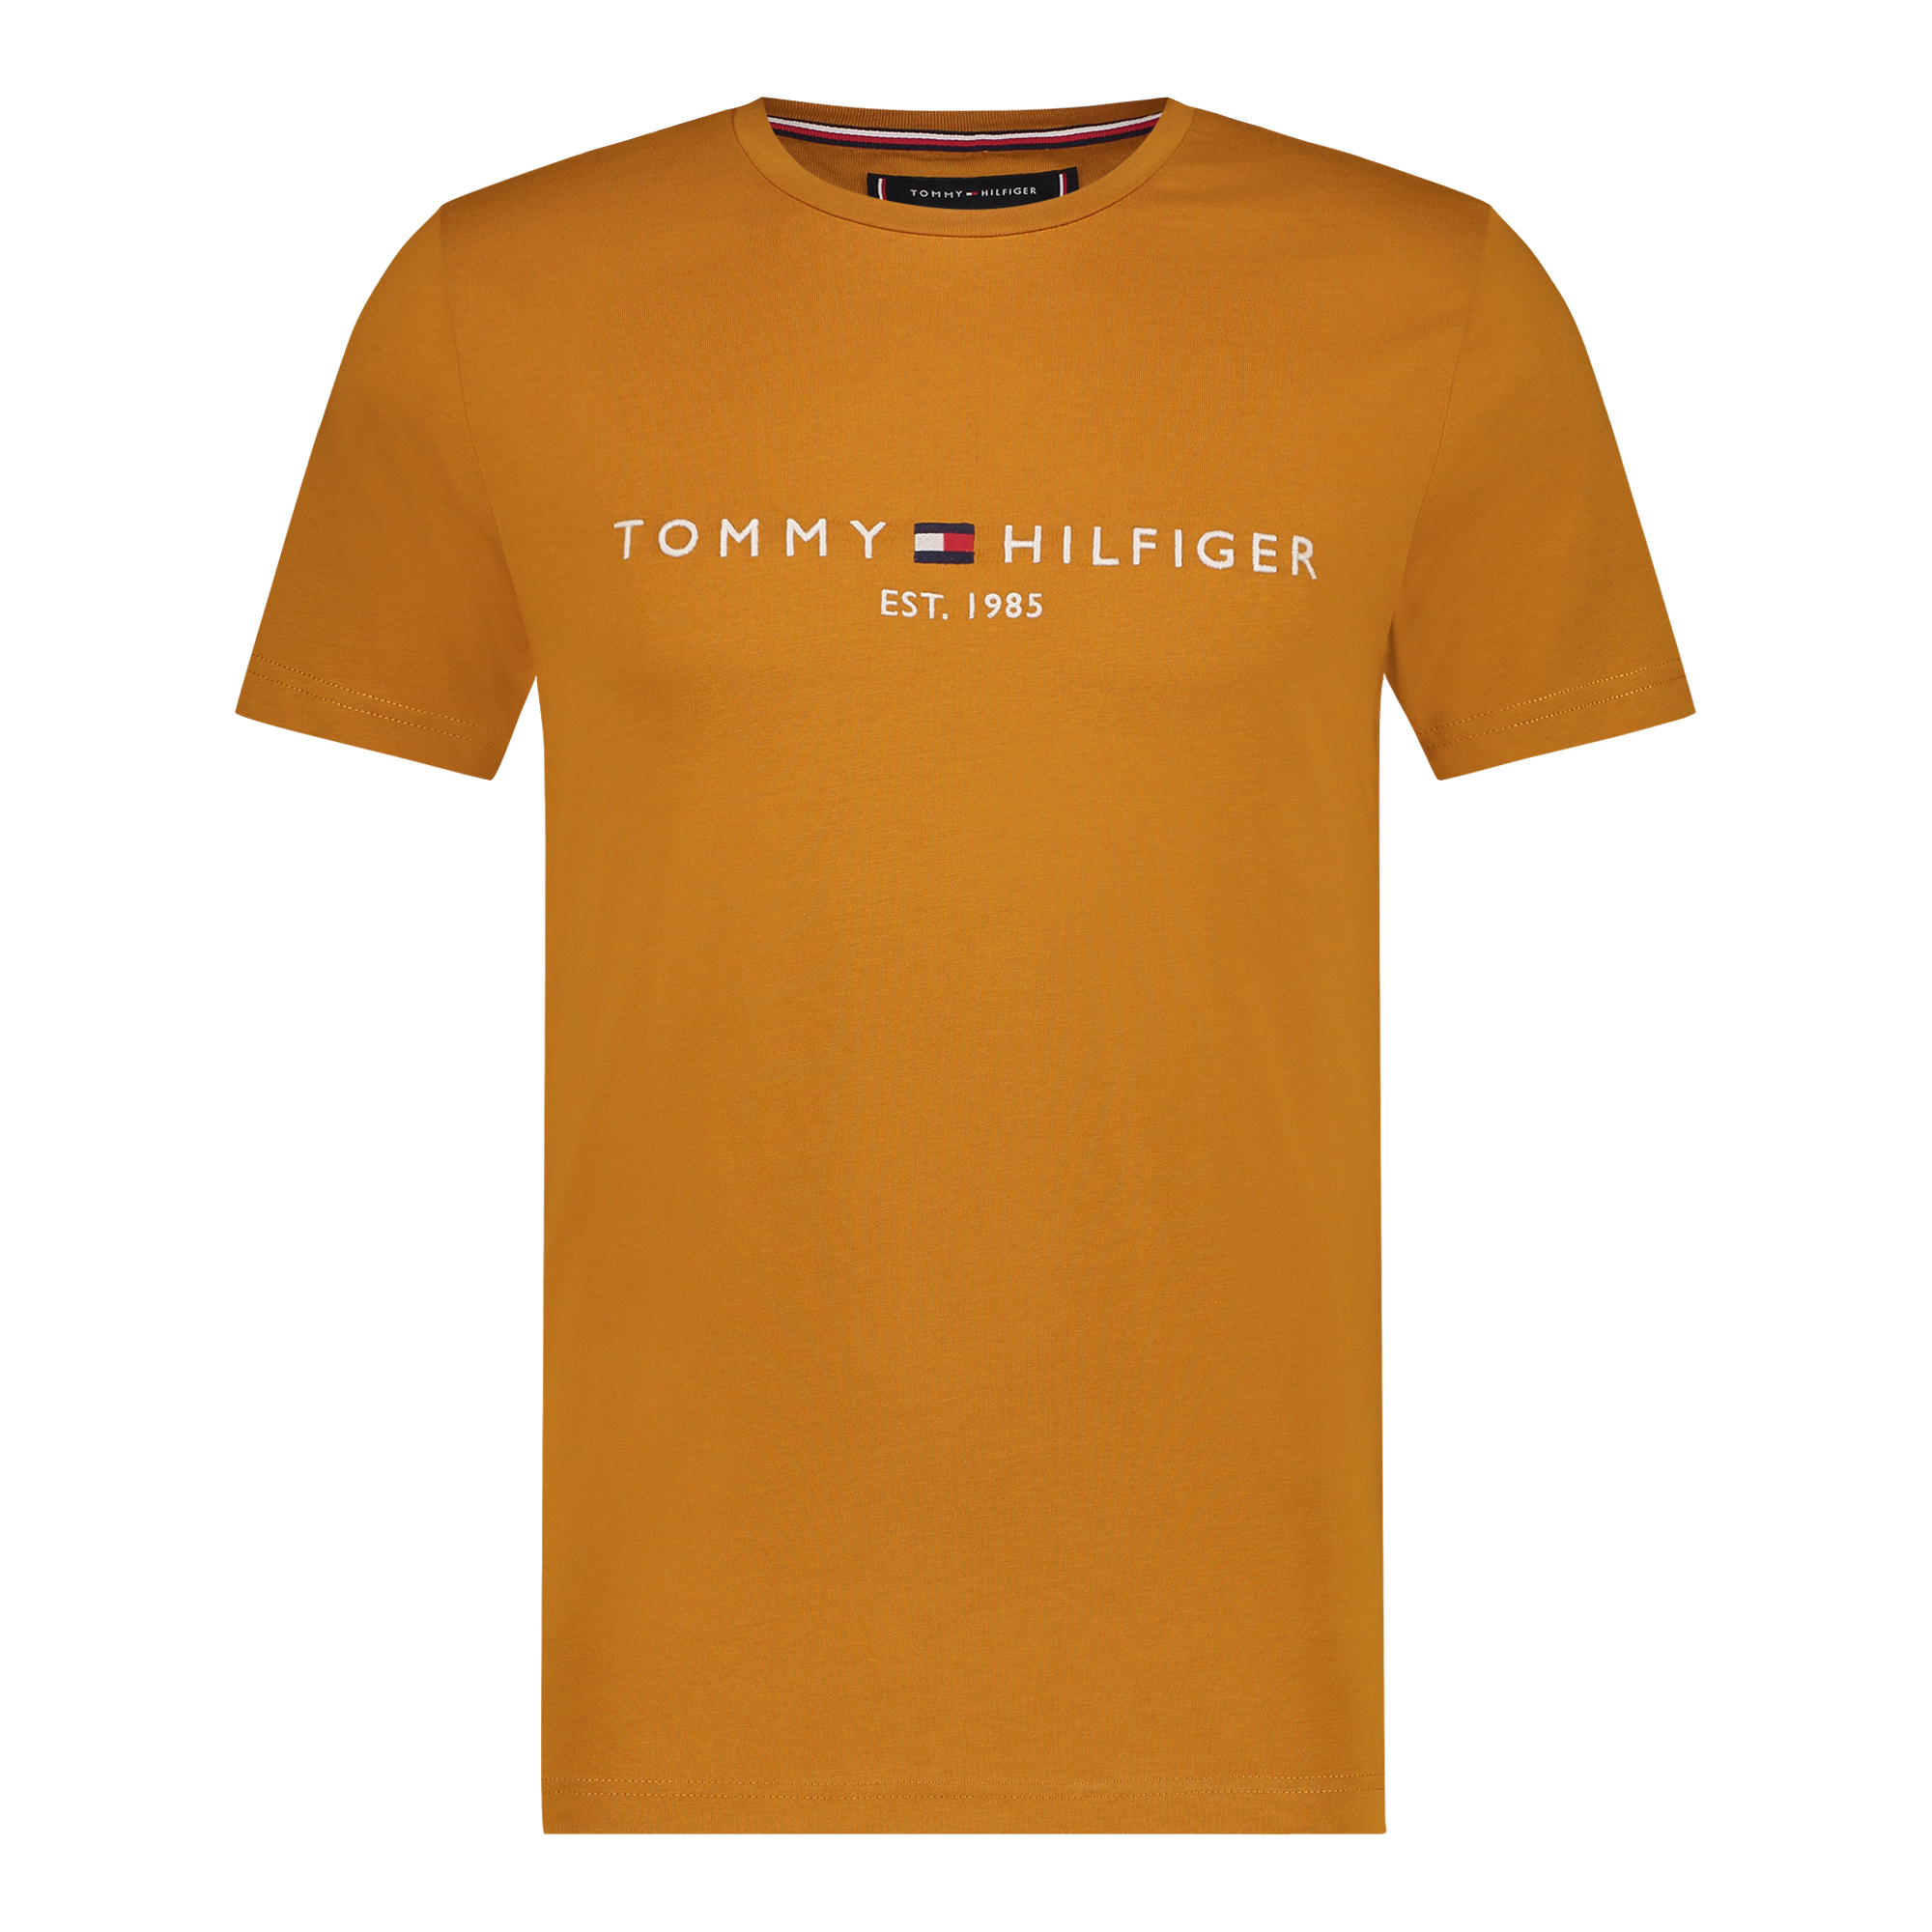 Tommy Hilfiger T-shirt Logo Geel